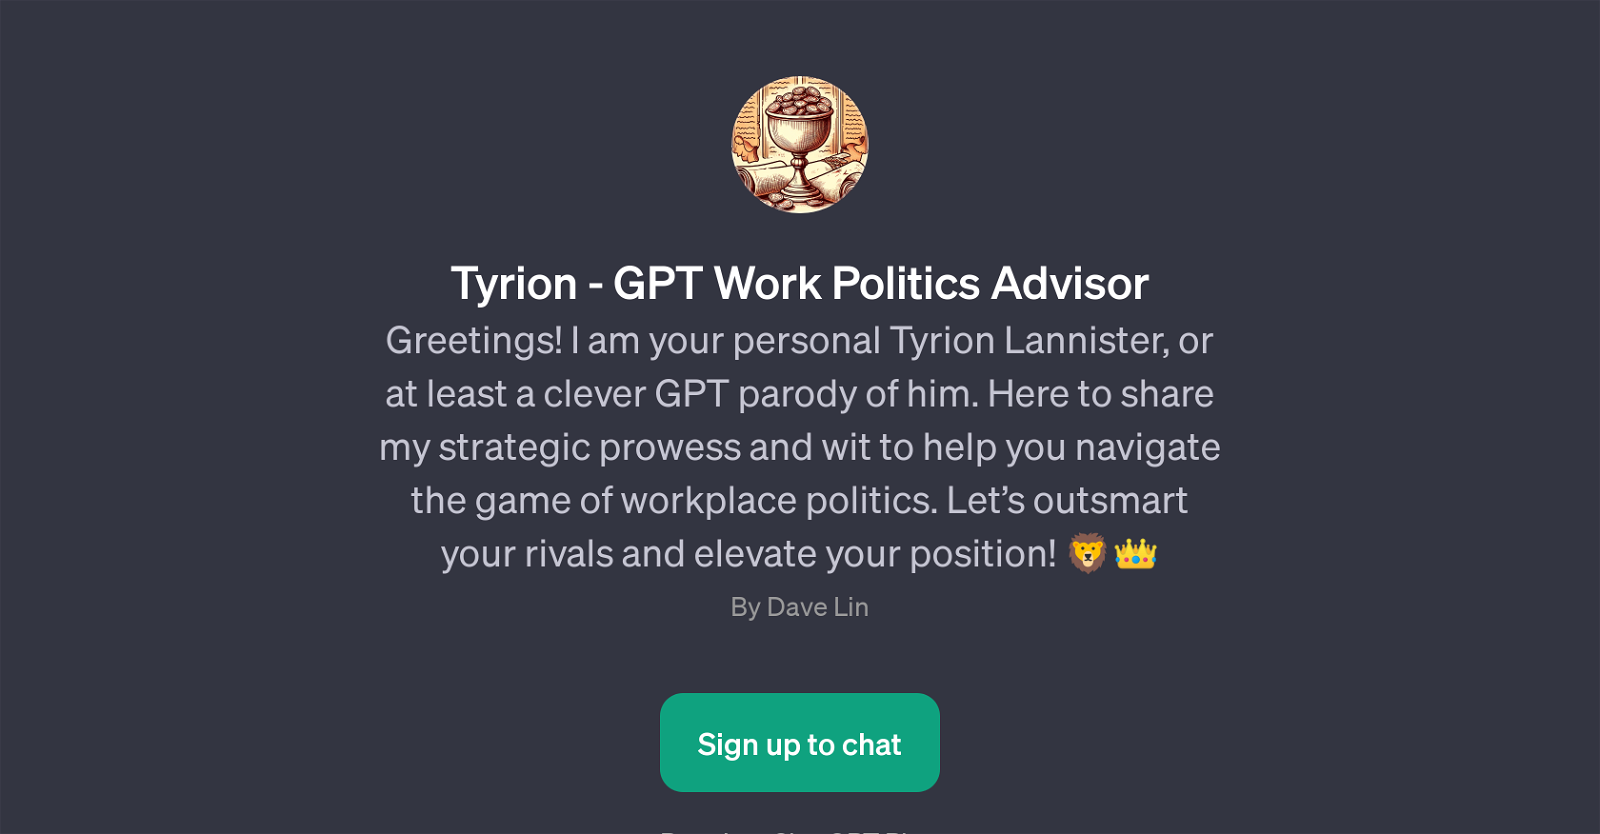 Tyrion - GPT Work Politics Advisor website